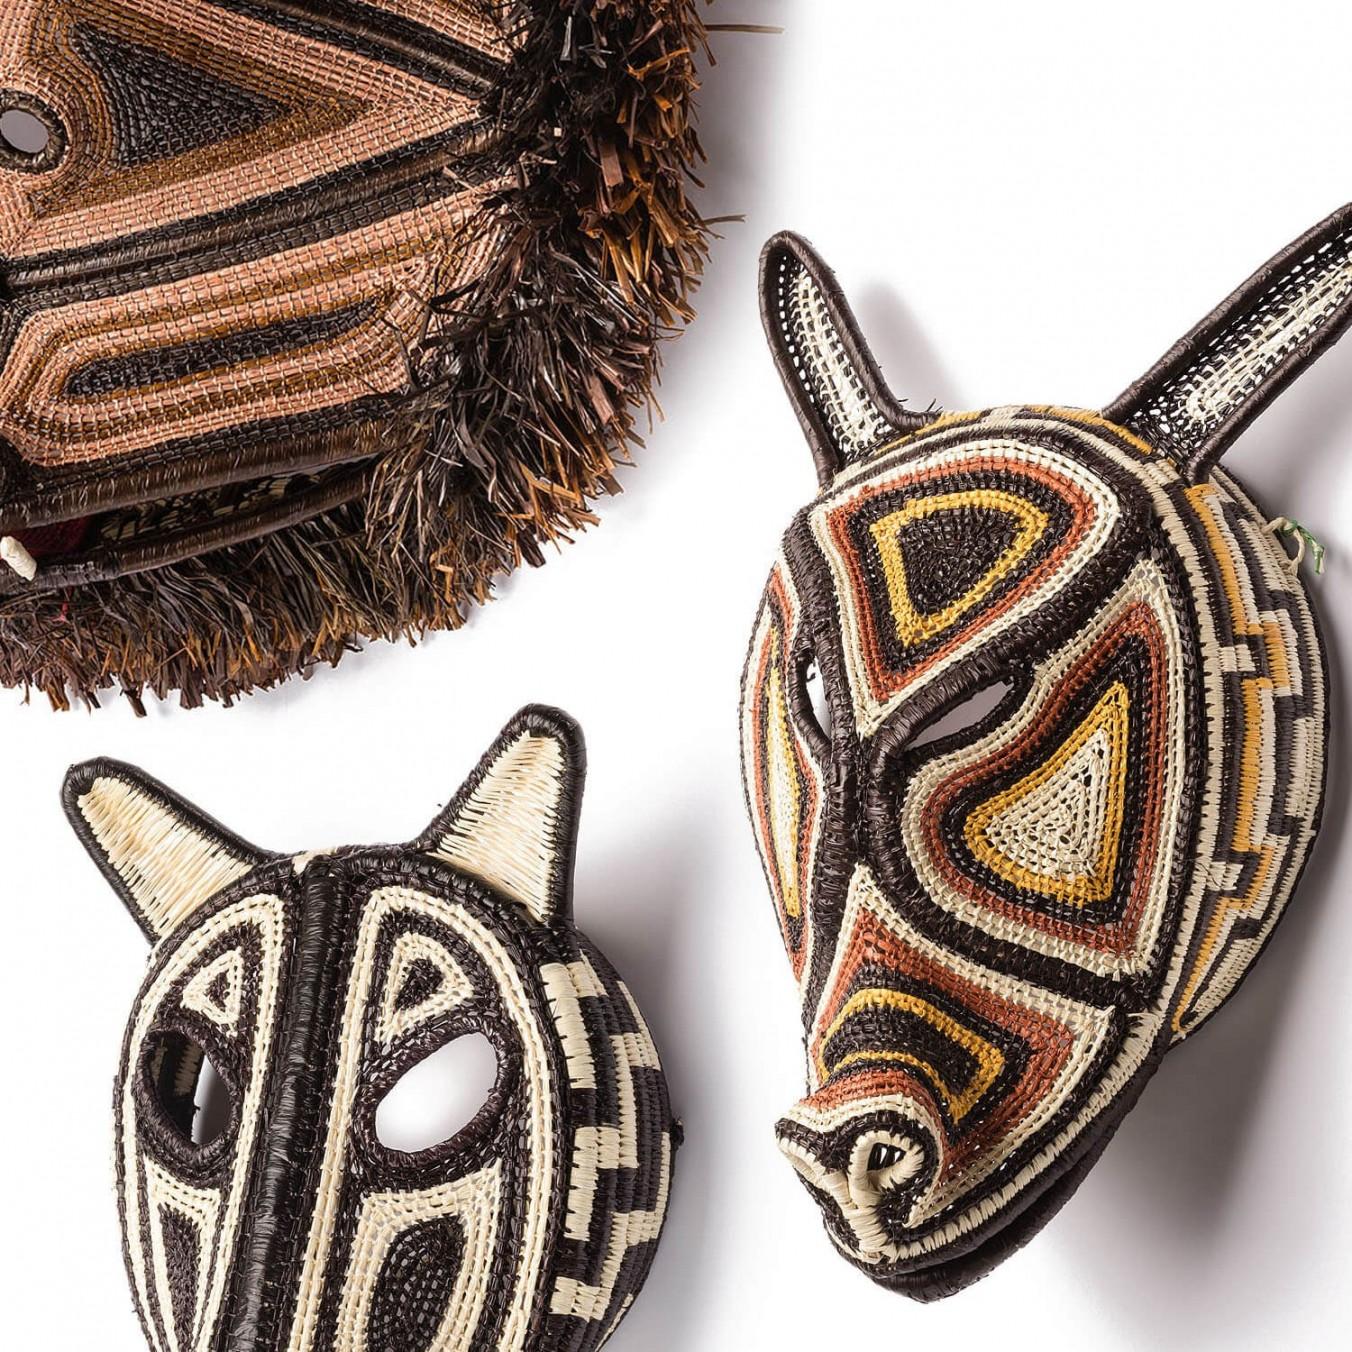 Dekorative handgewebte Maske aus Panama, Nemboro von Ethic&Tropic (Gehstock) im Angebot